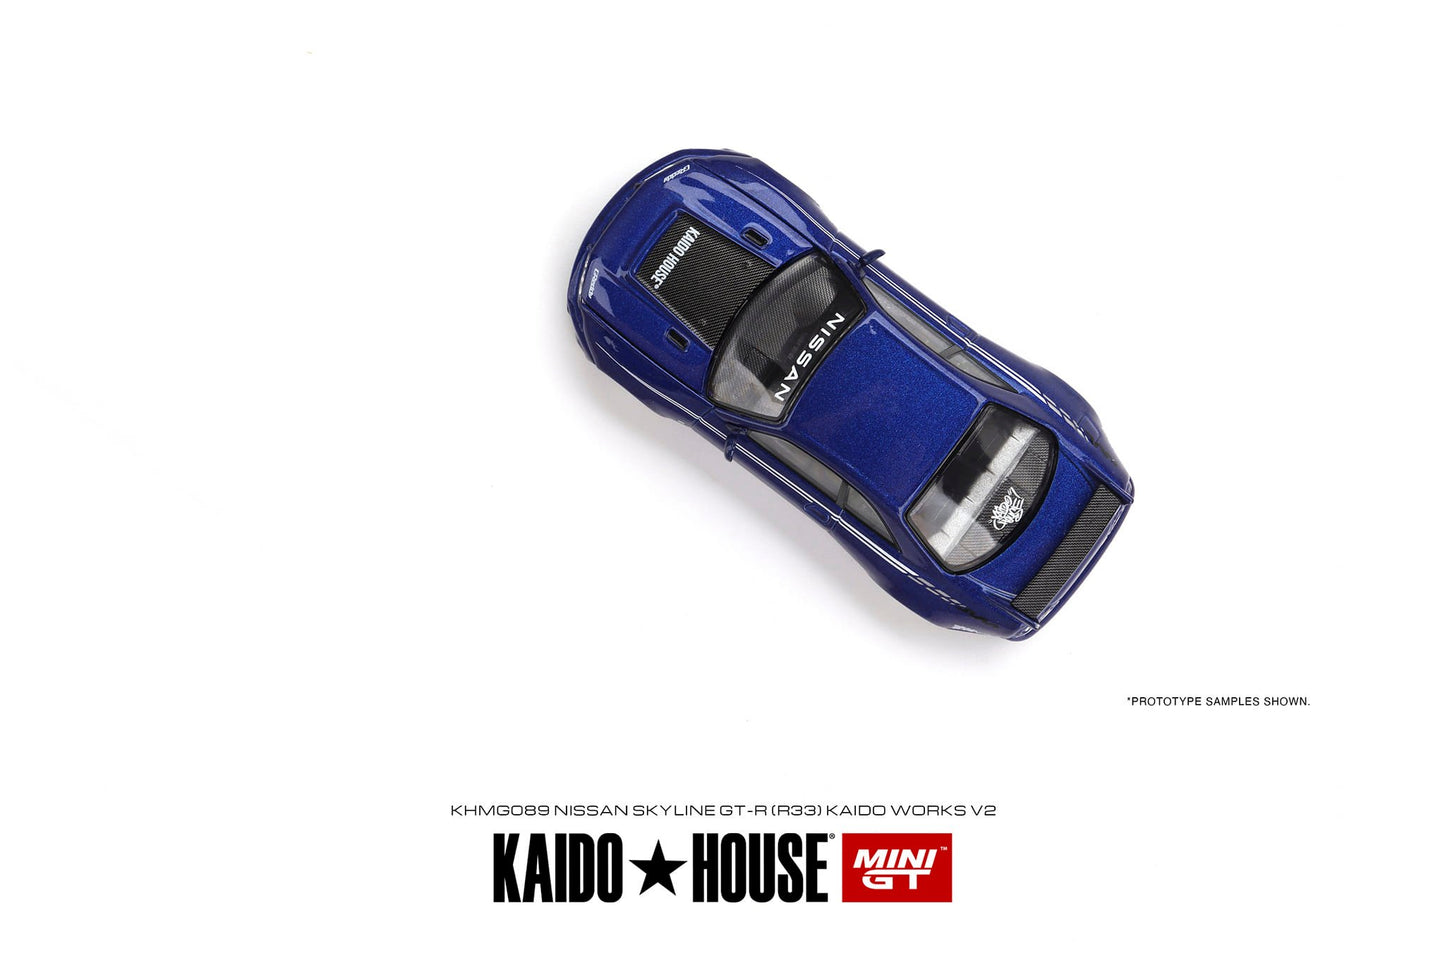 Mini GT x Kaido House Nissan Skyline GT-R (R33) Kaido Works V2 in Blue